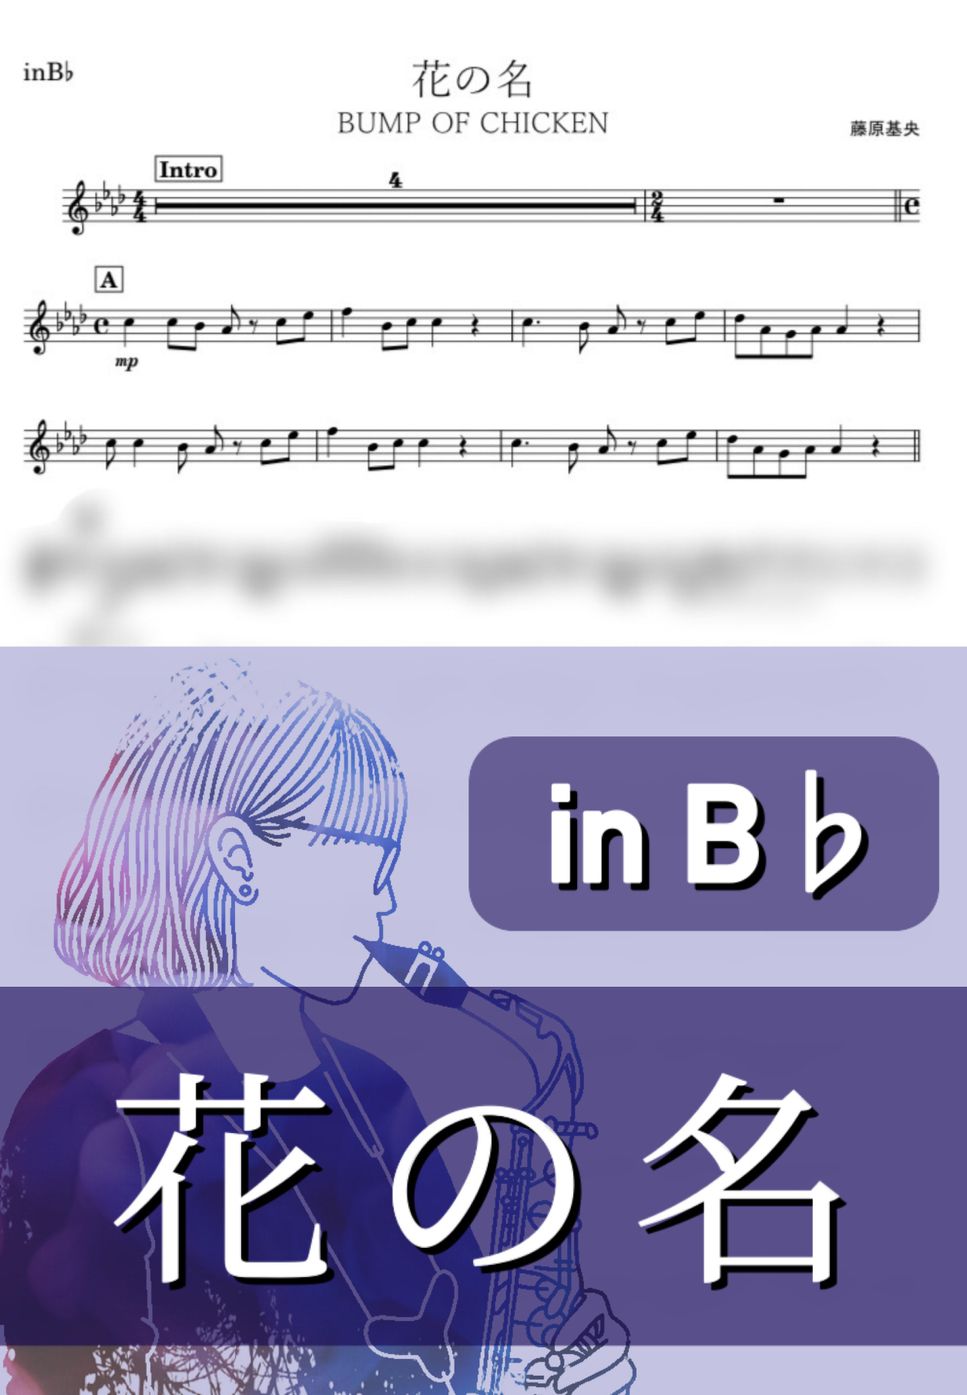 BUMP OF CHICKEN - 花の名 (B♭) by kanamusic